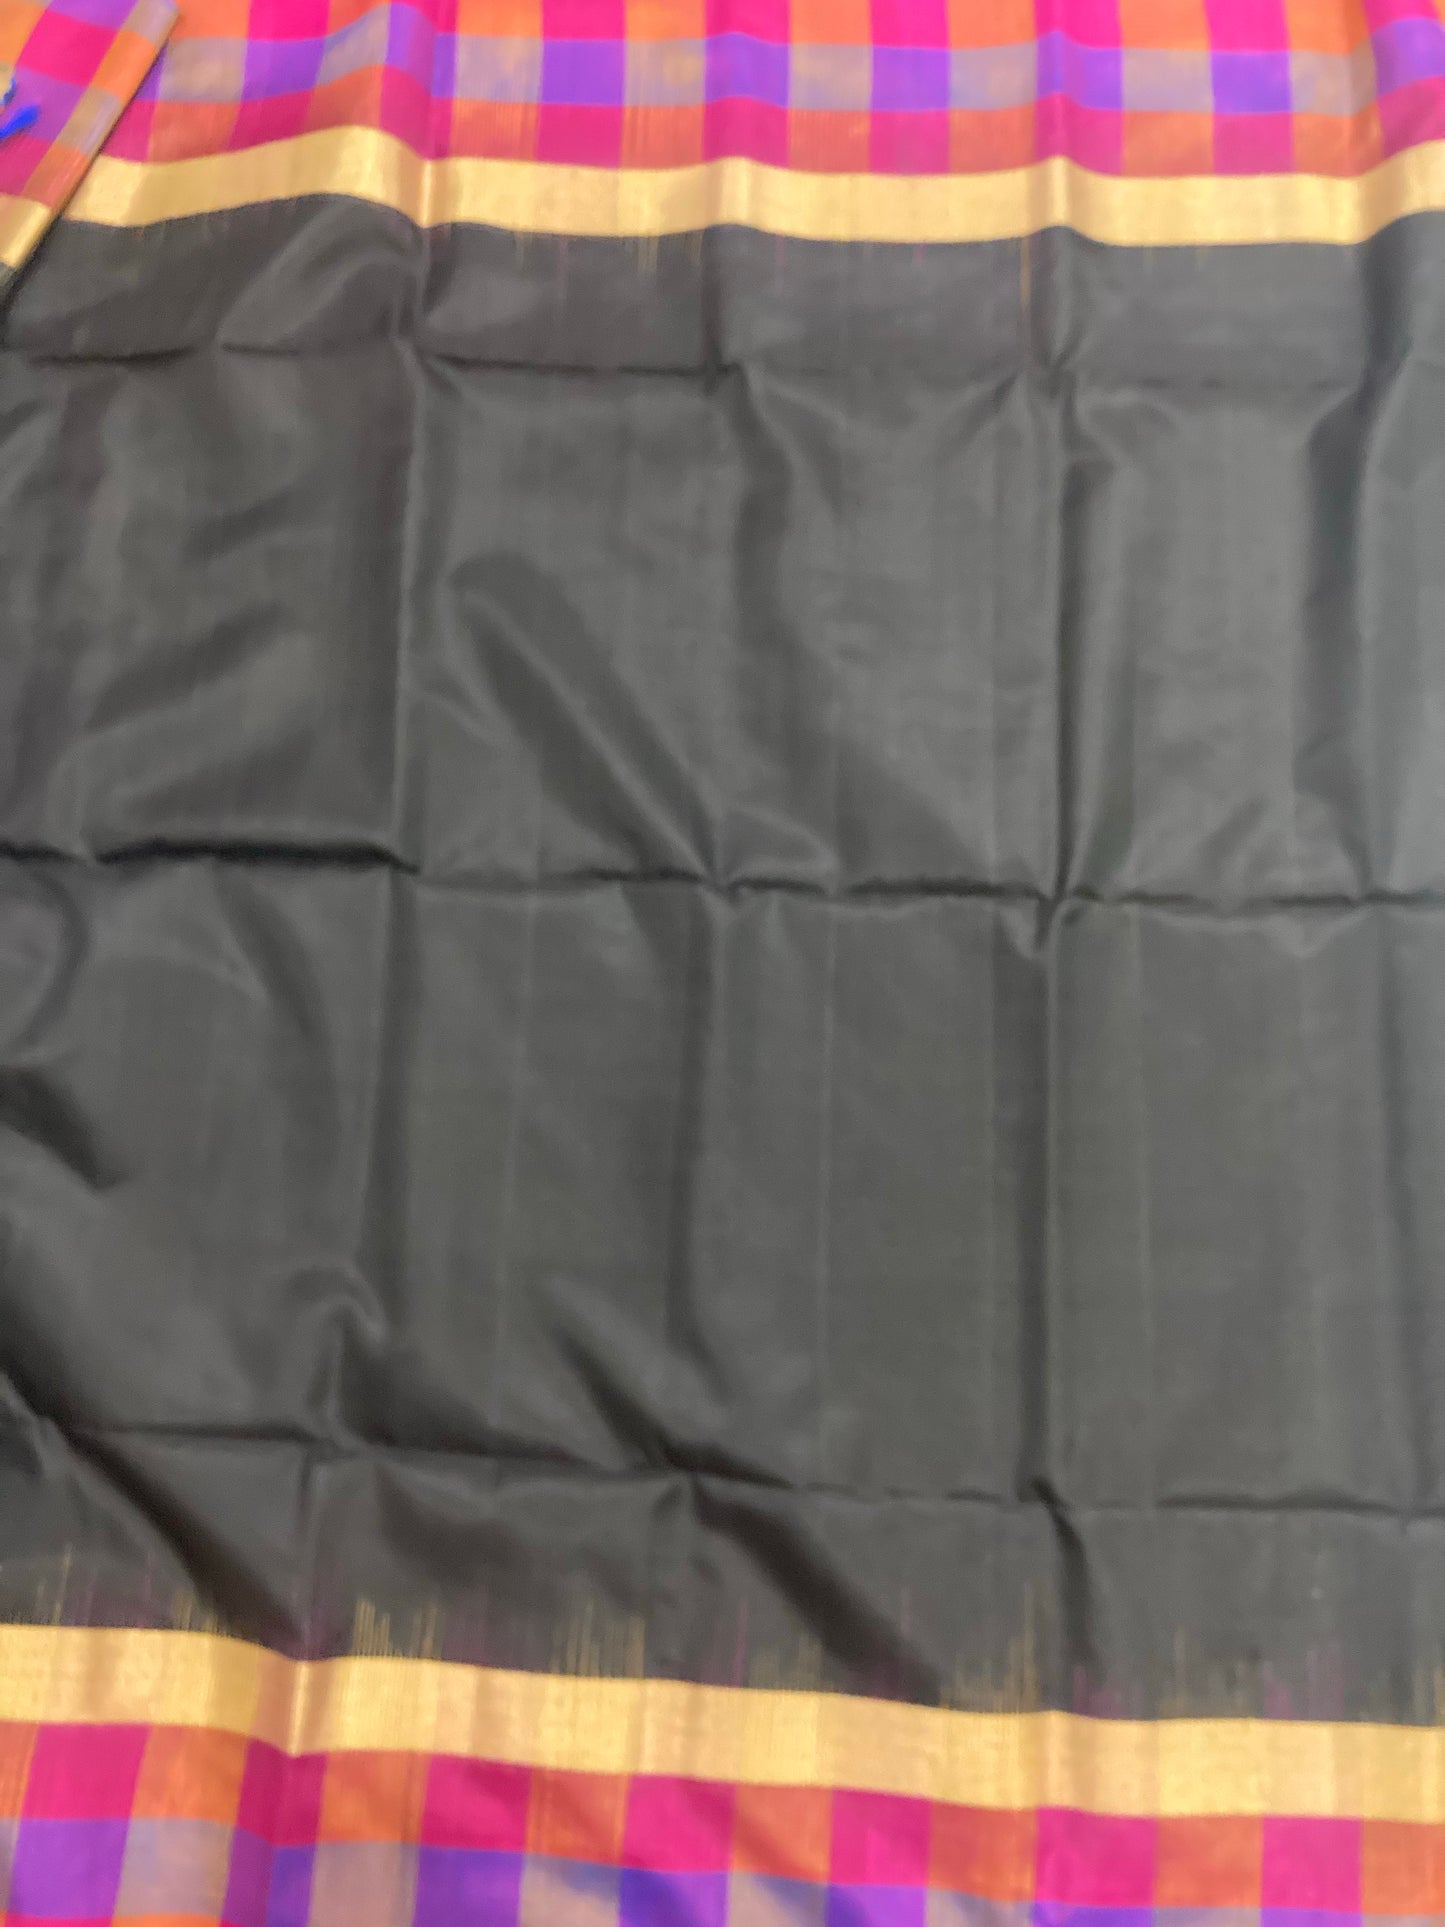 Southloom Handloom Pure Silk Kanchipuram Saree in Black with Check Designs